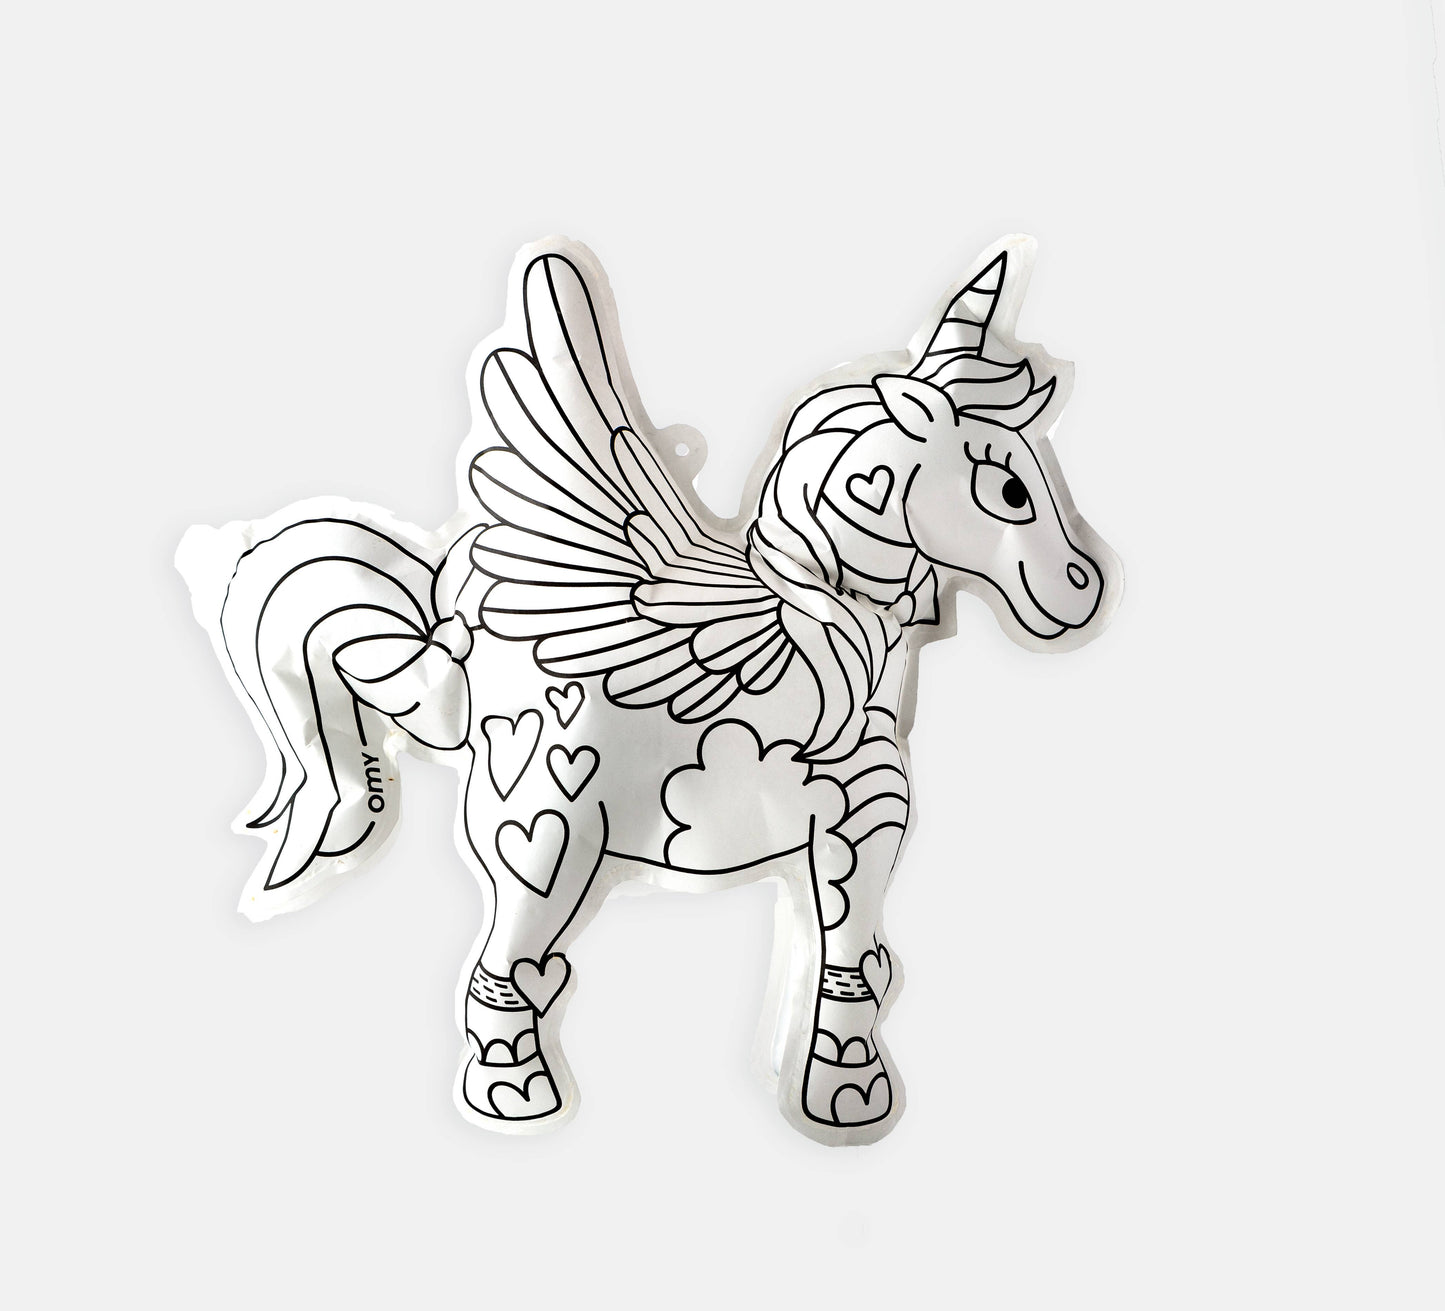 Unicorn Air Toy